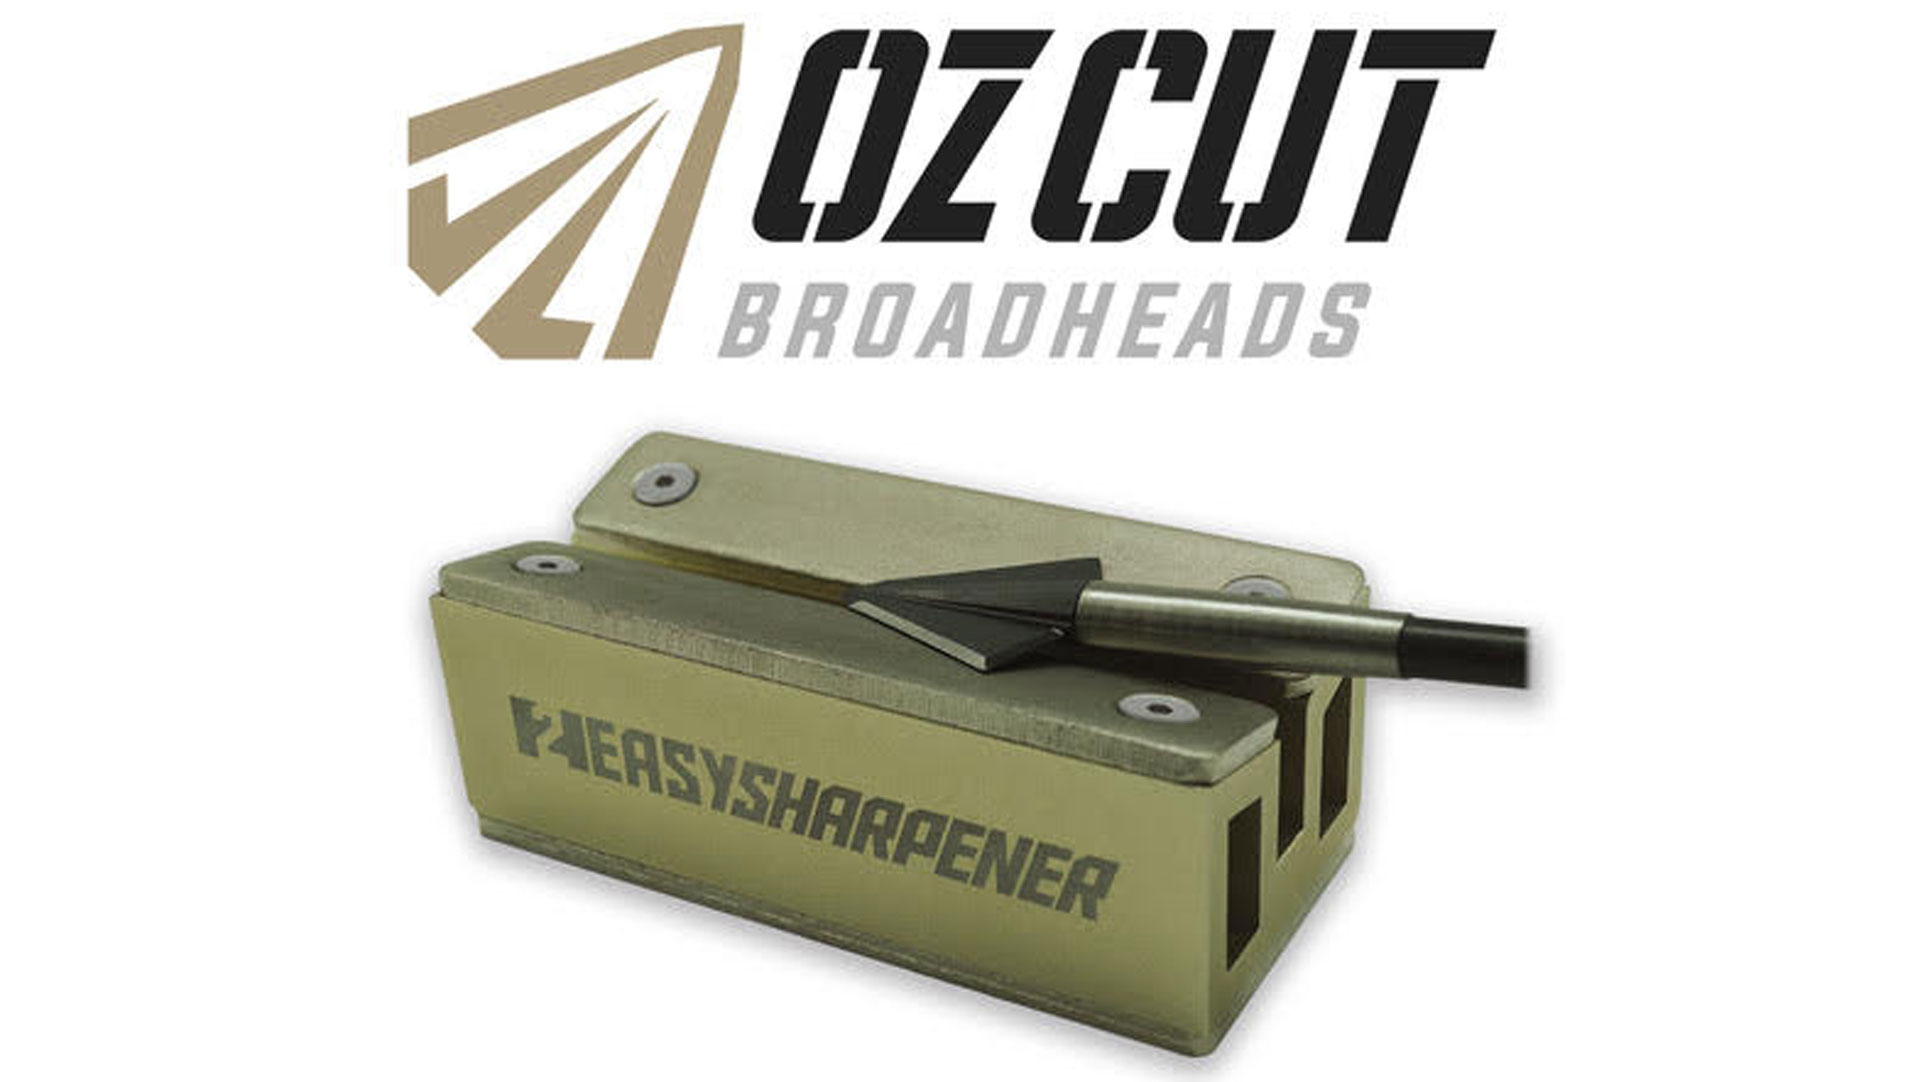 Mechanical Broadhead sharpener